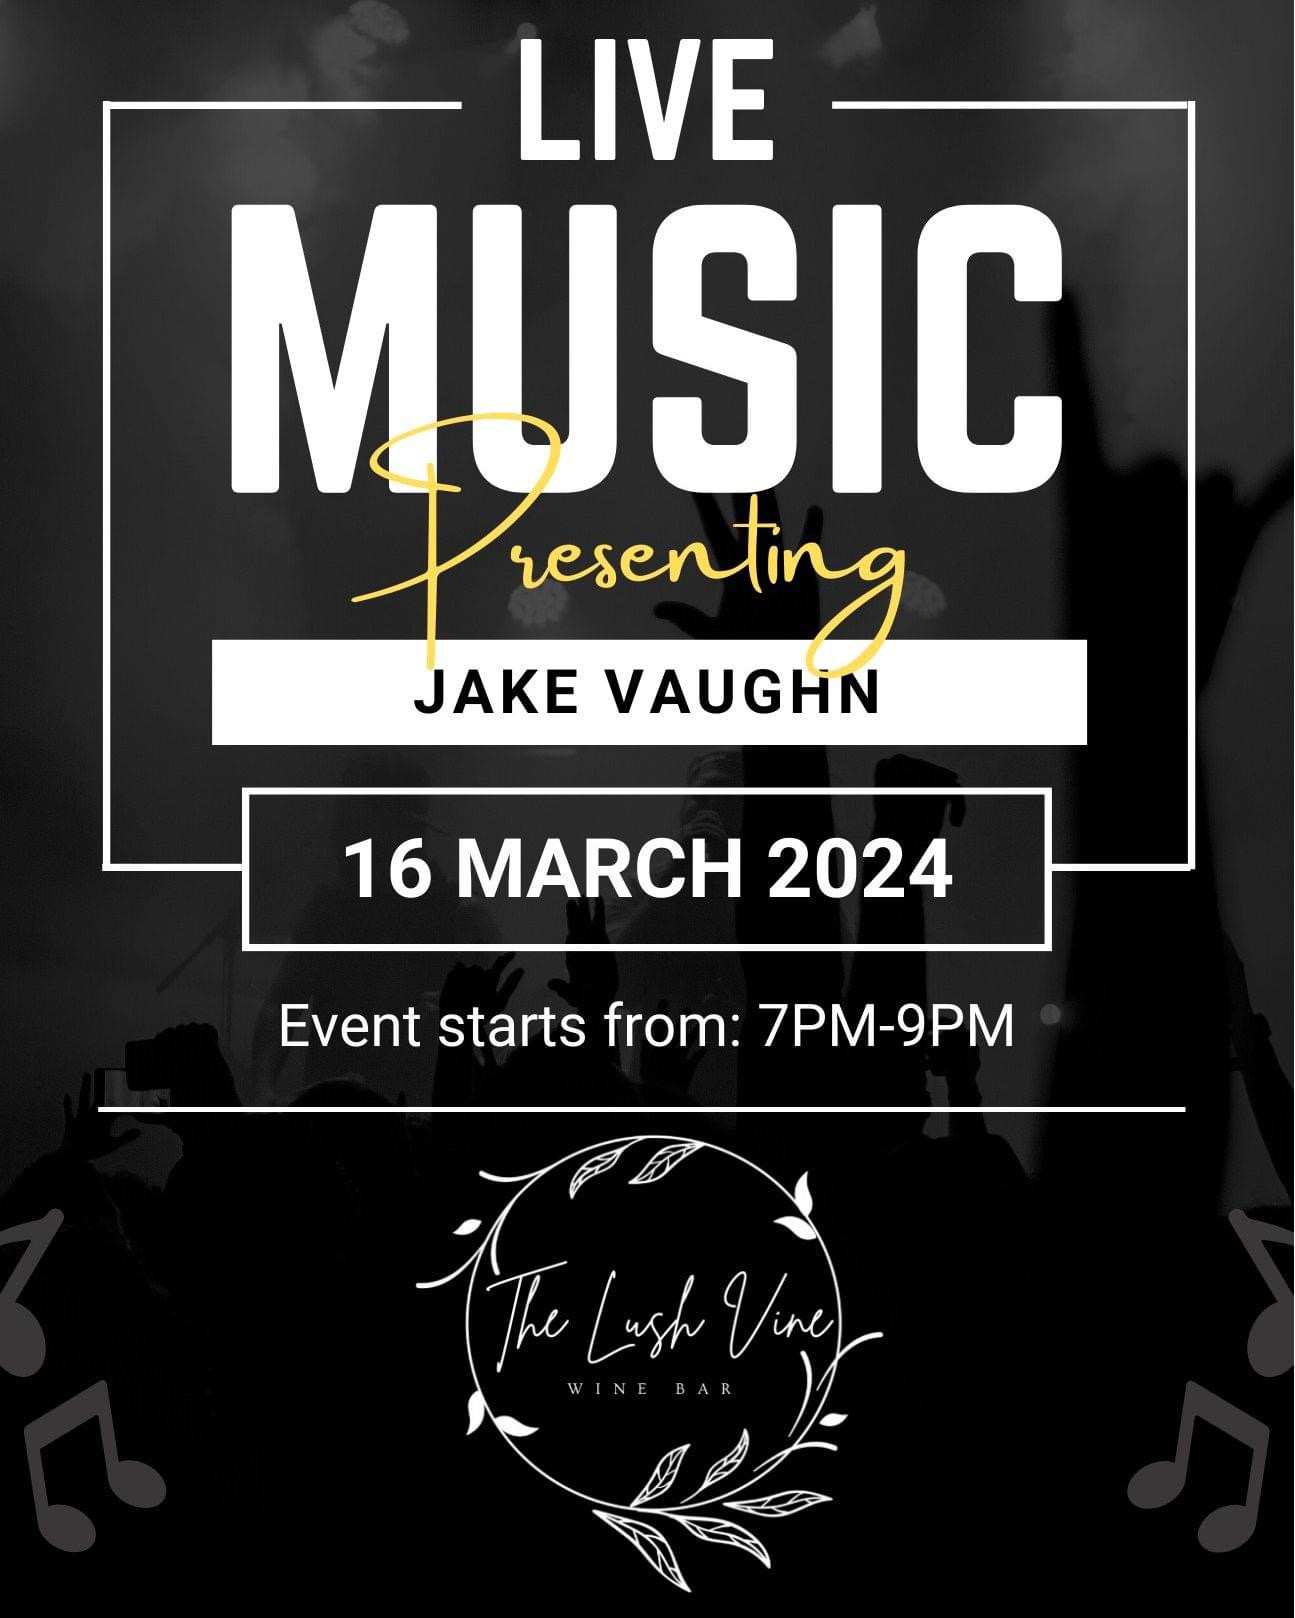 Jake Vaughn live at The Lush Vine